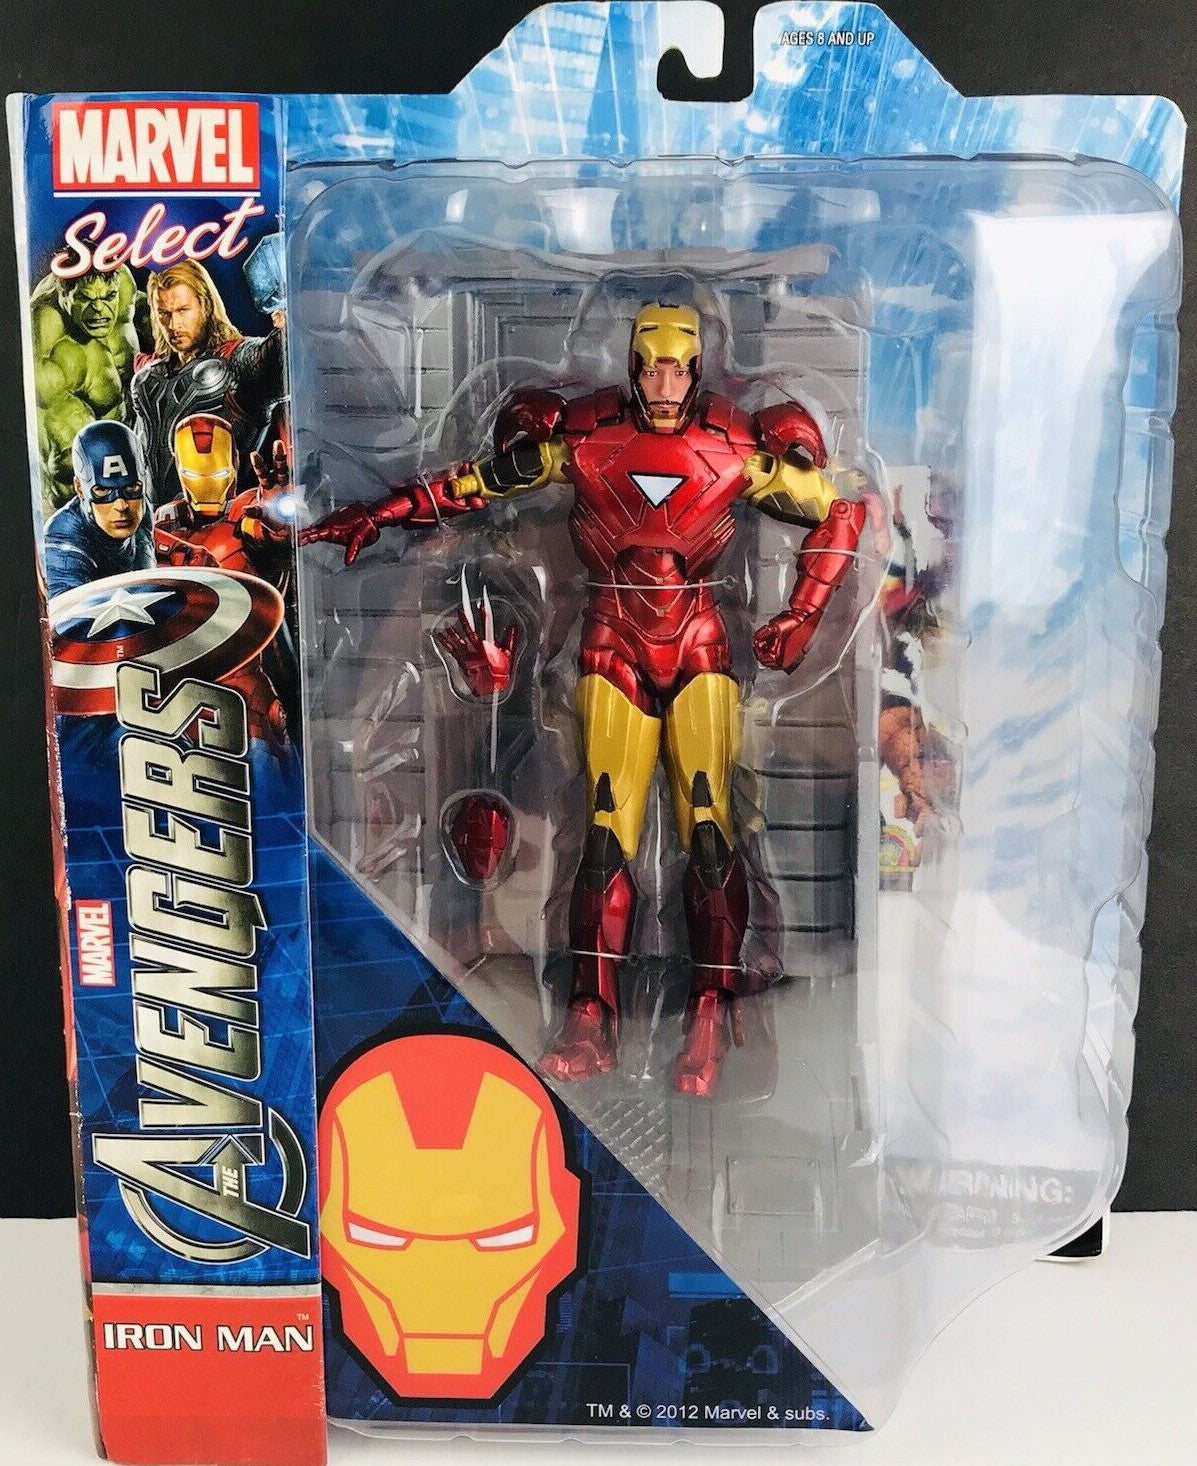 Iron Man Marvel Select action figure